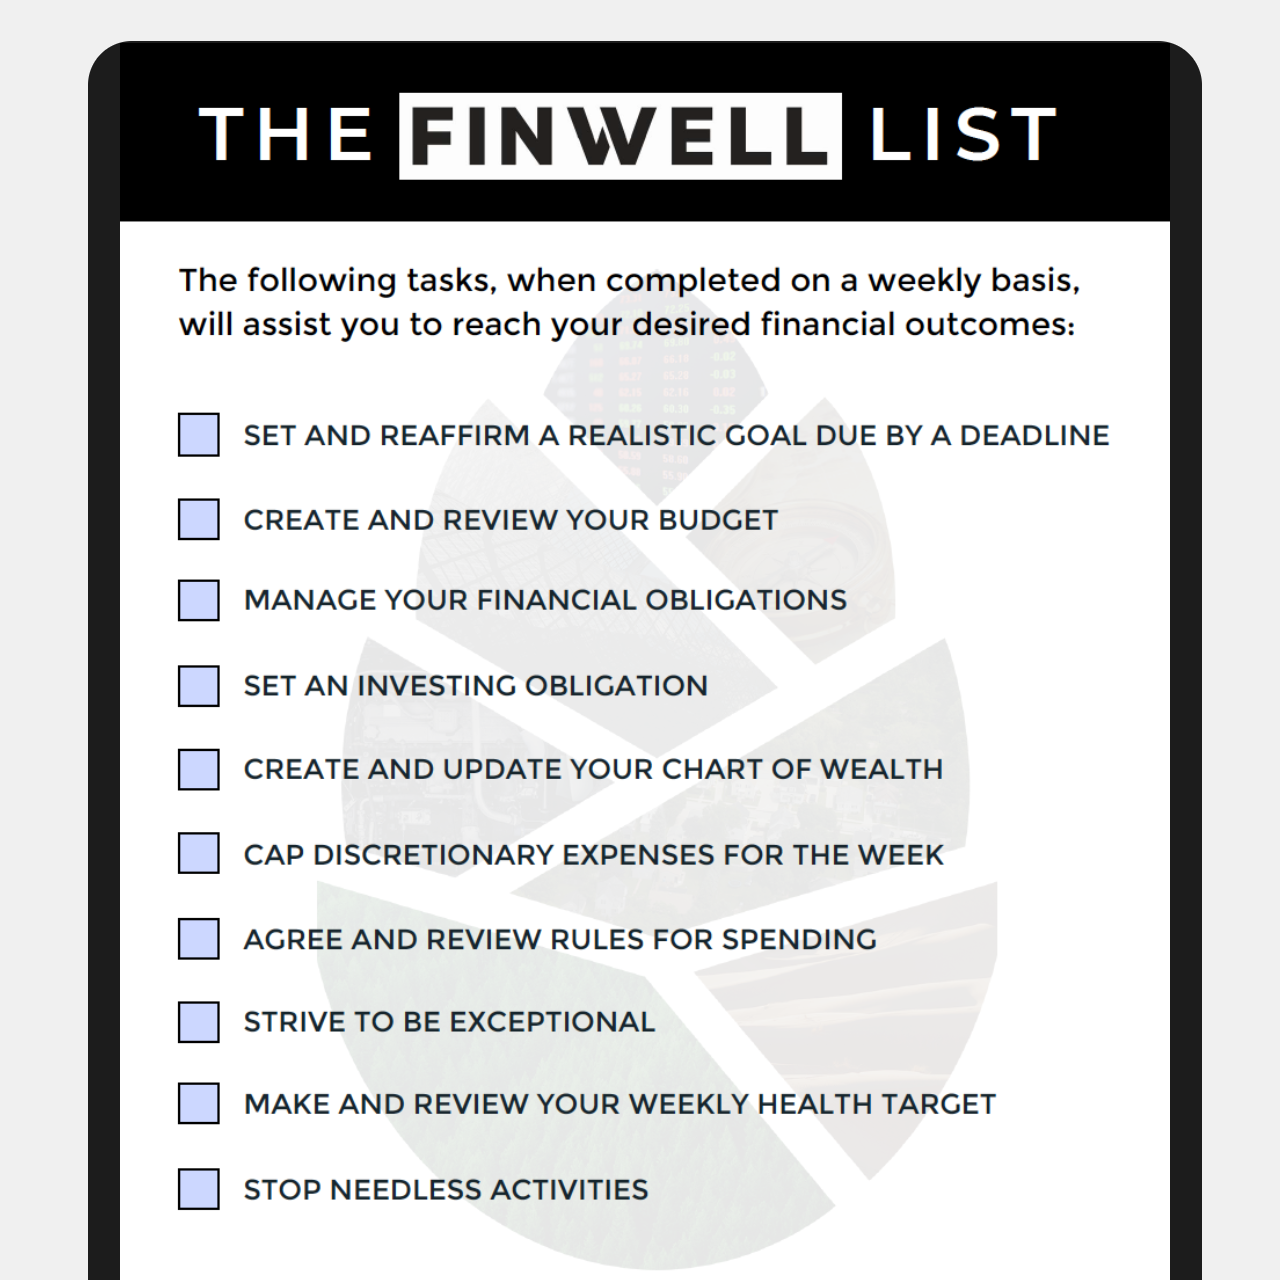 the finwell list